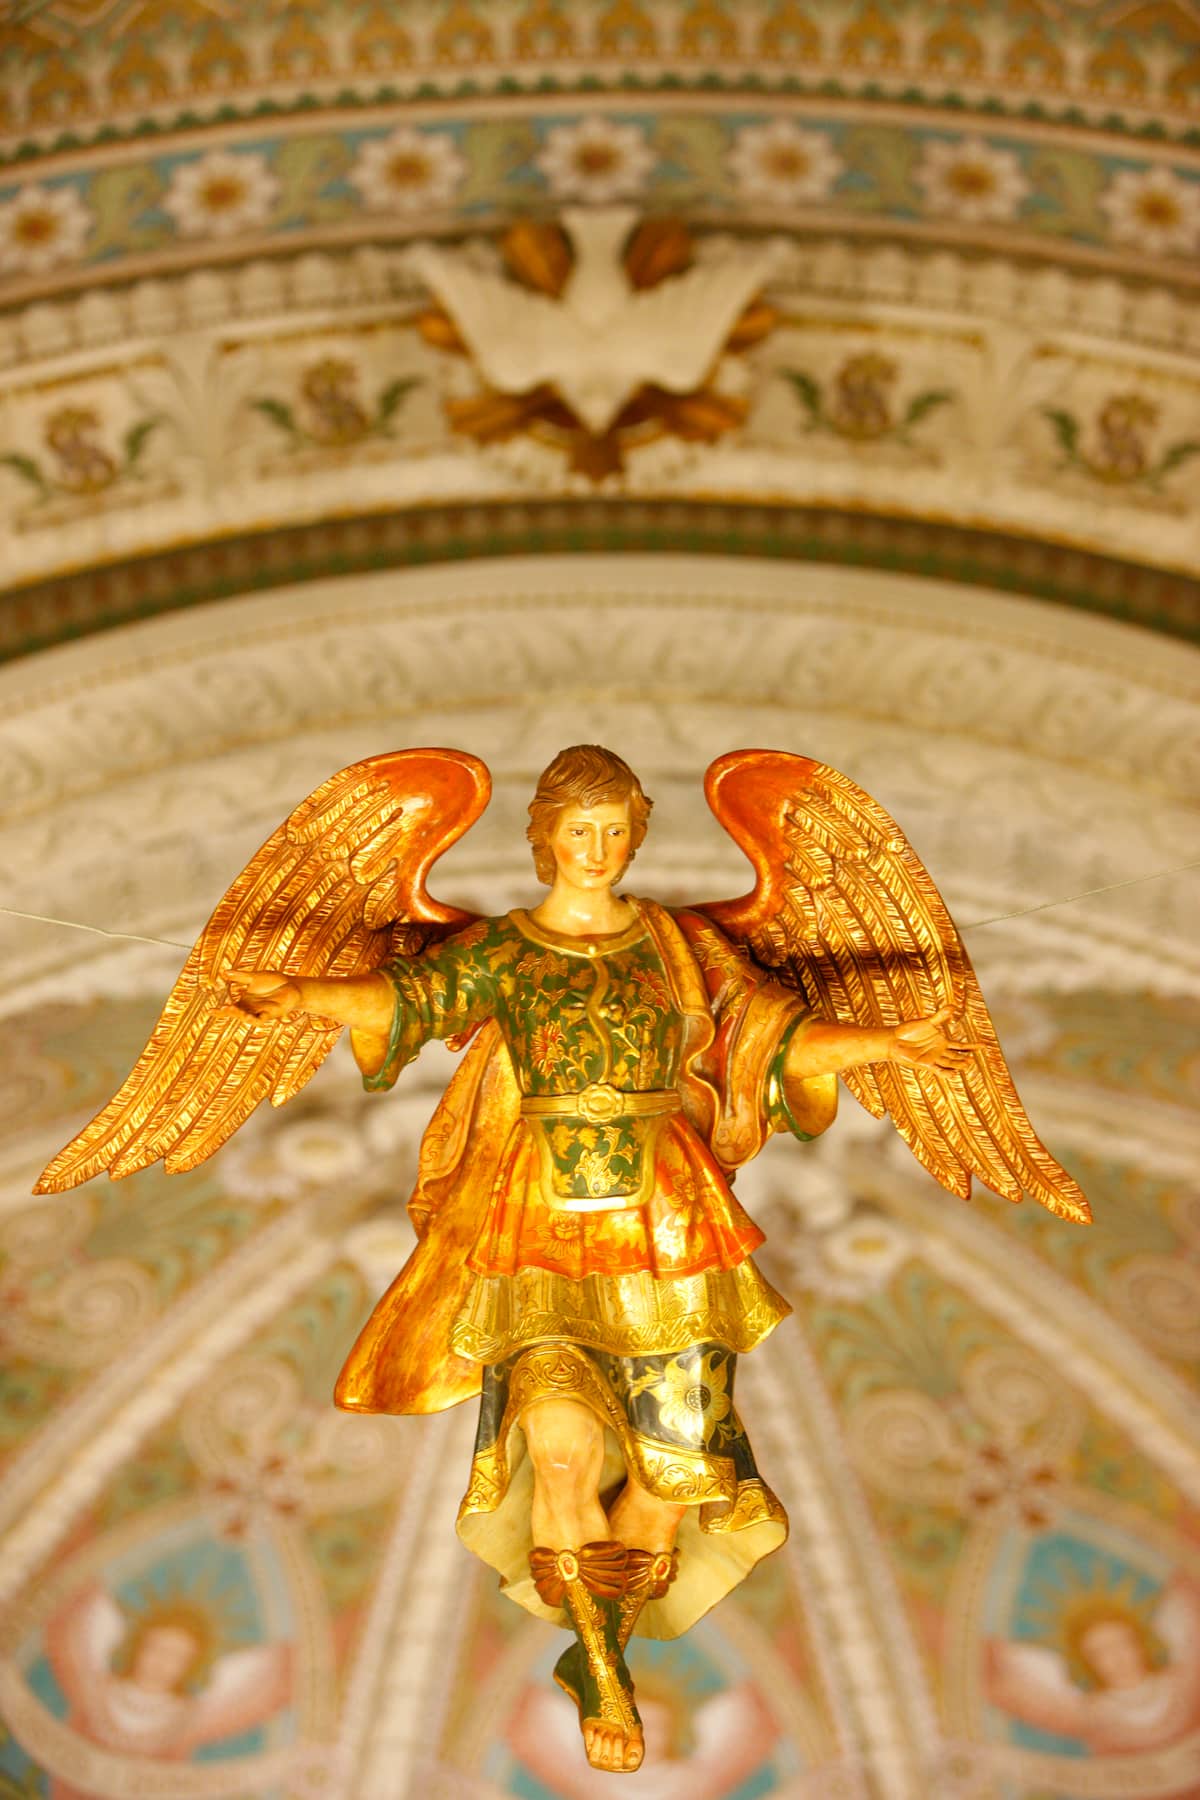 Archangel Azrael, the Angel of Death in Islam